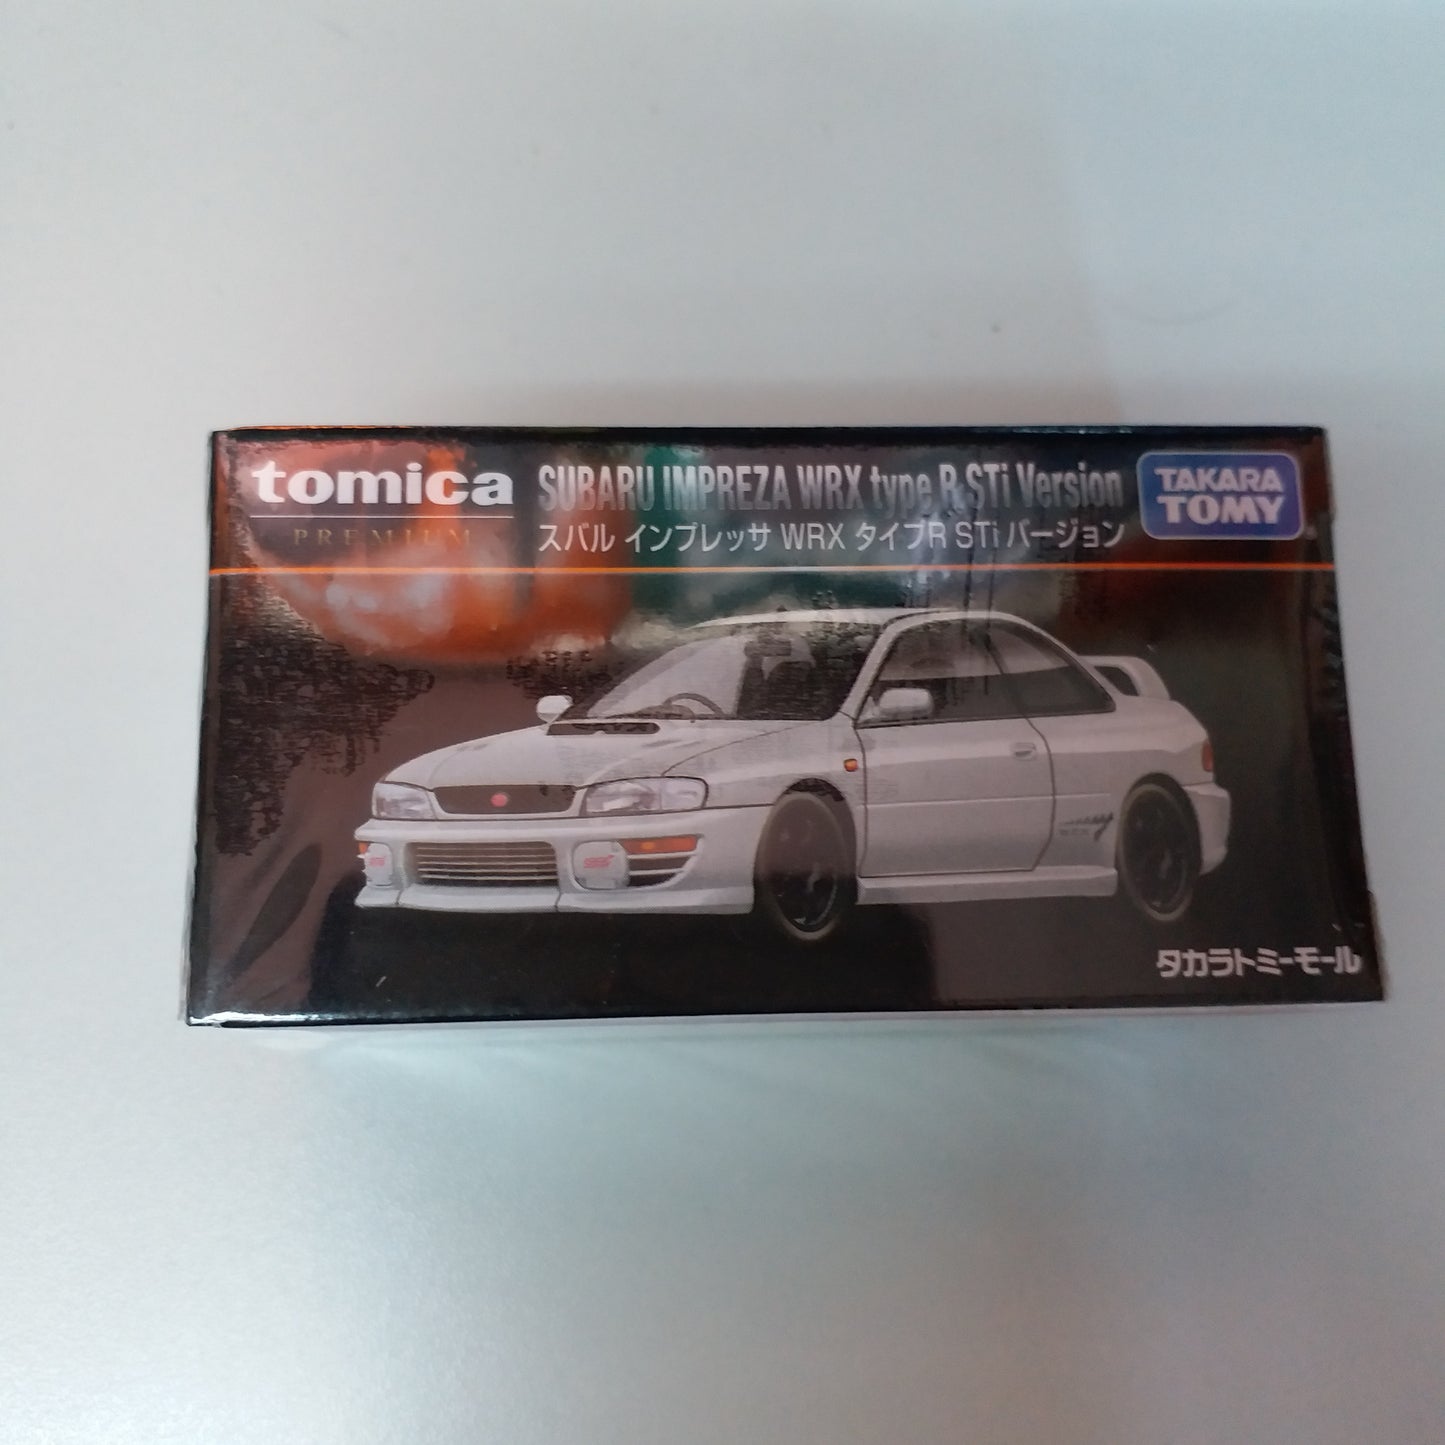 Takara Tomy Mall MALL Original Tomica Premium Subaru Impreza WRX Type R STi Version 1:62 SCALE